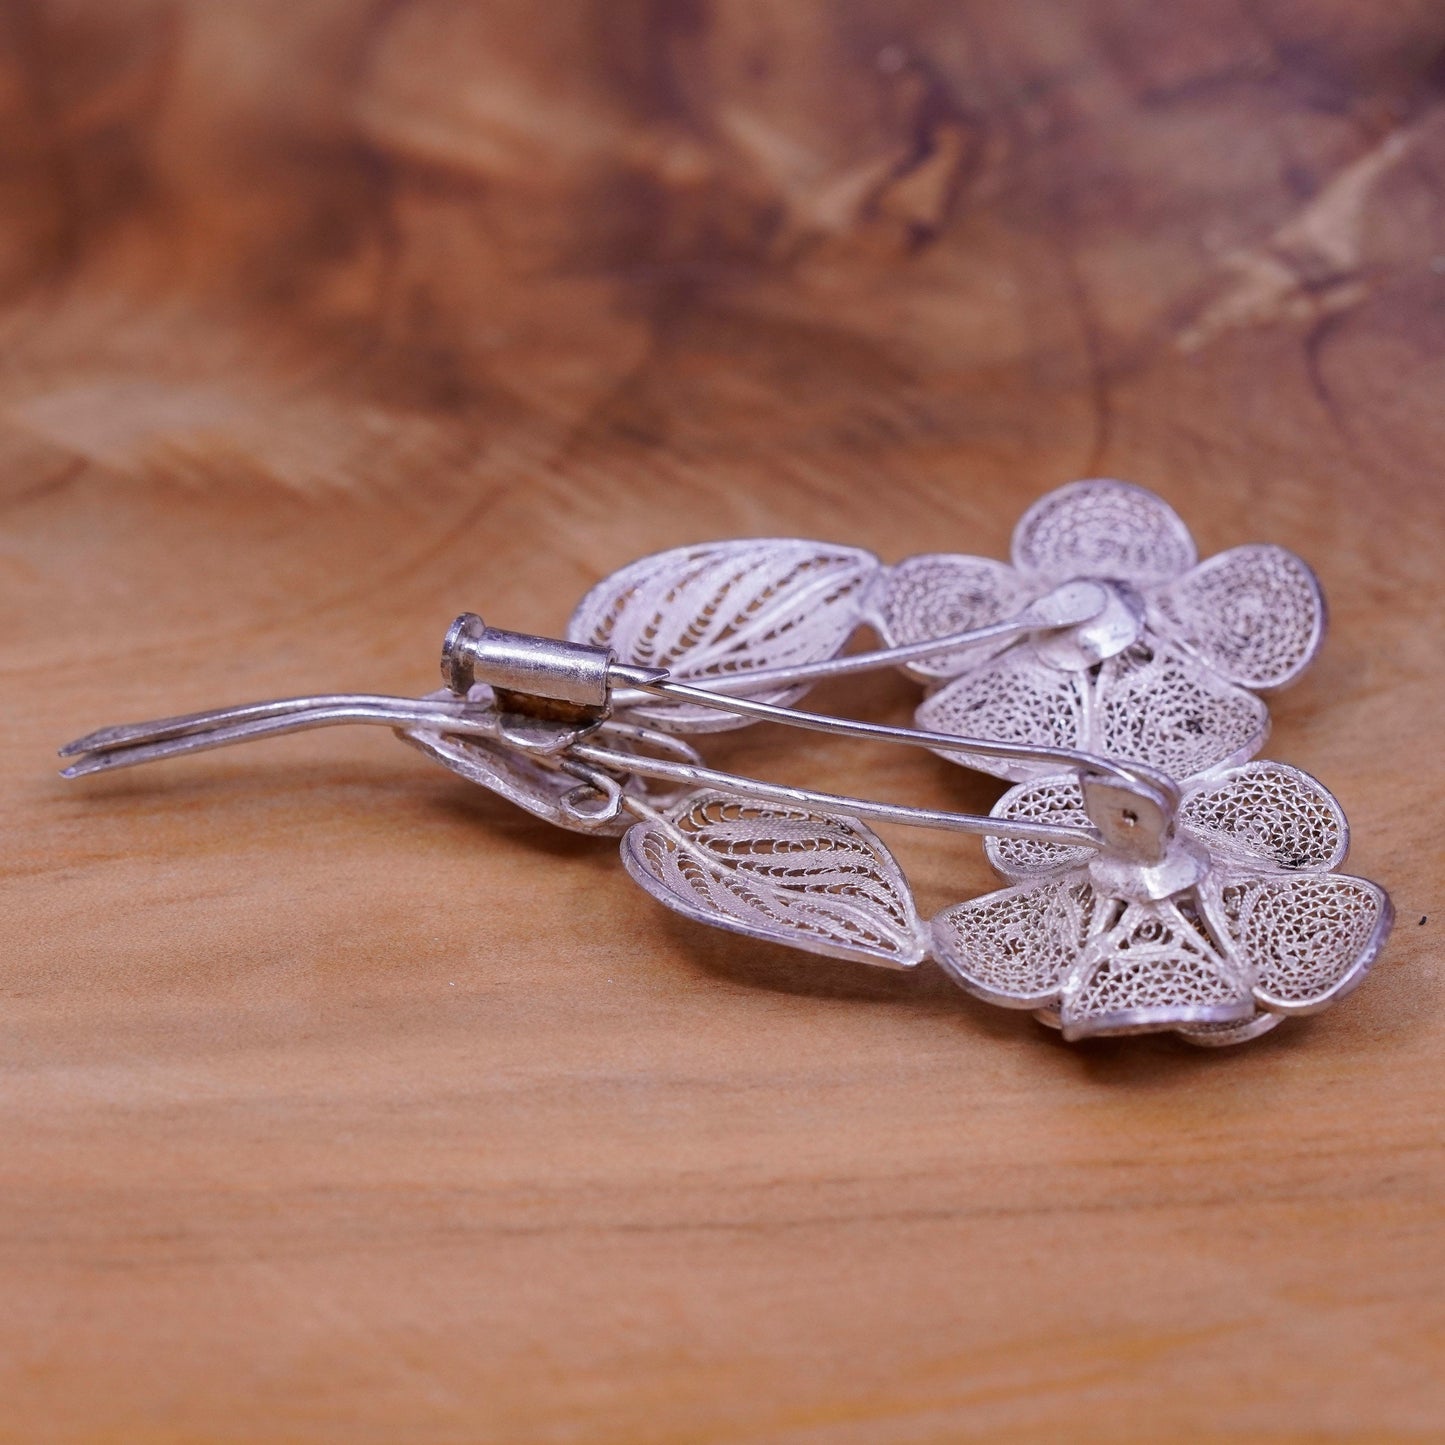 Vintage handmade sterling 925 silver filigree flower floral brooch